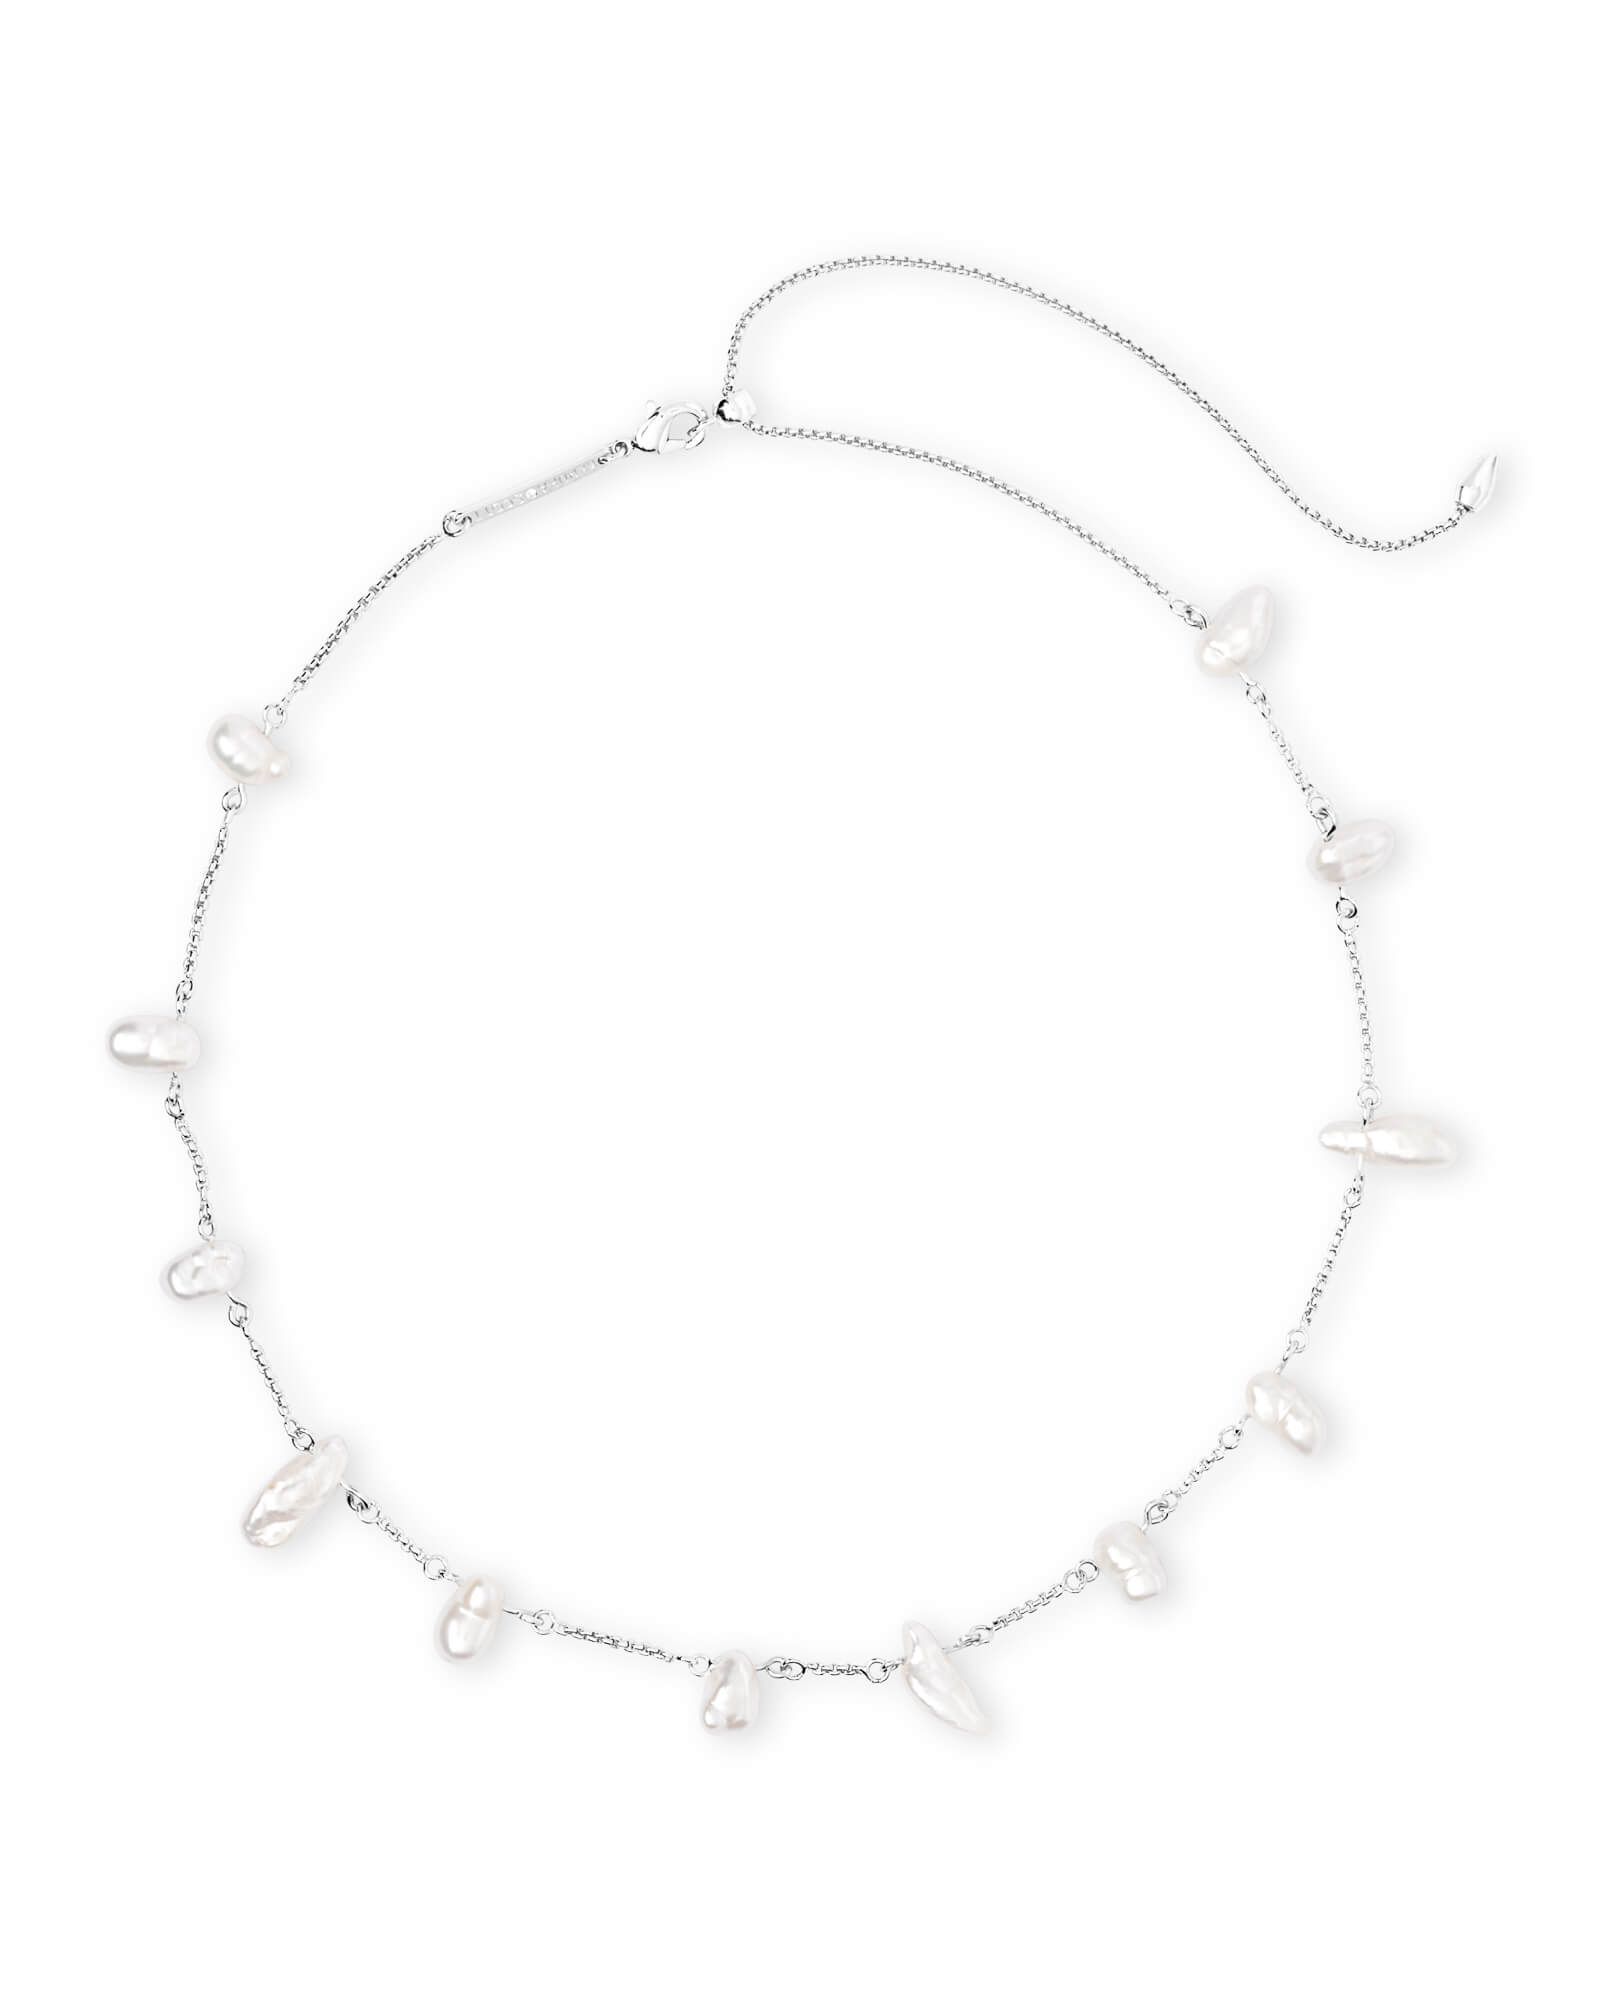 Krissa Bright Silver Choker Necklace in Pearl | Kendra Scott | Kendra Scott